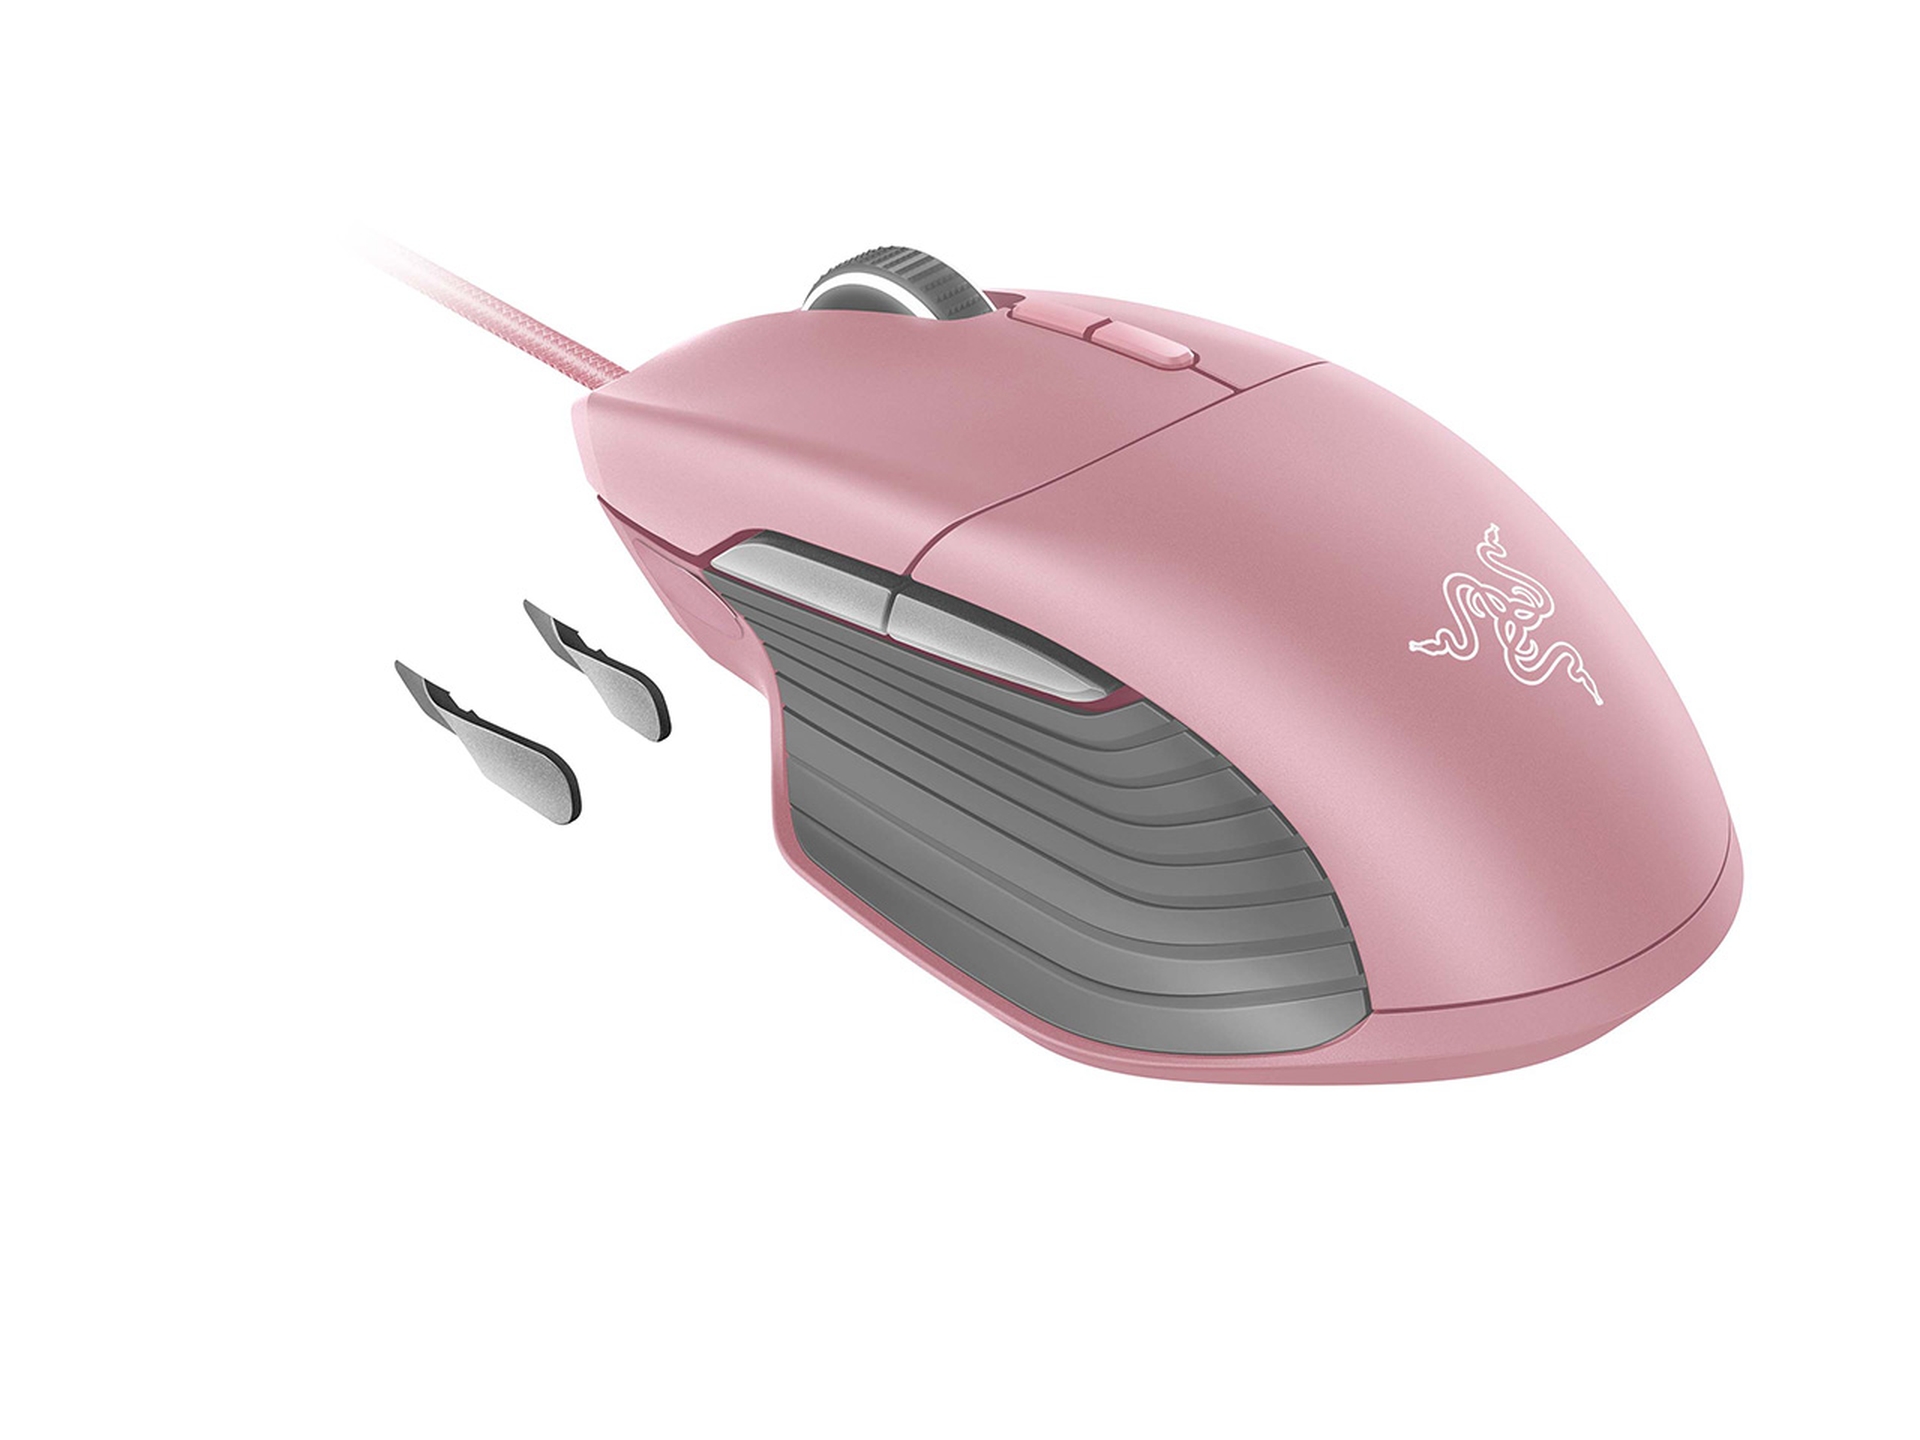 Project White、ピンクのゲーミングデバイス「Razer Quartz Pink」7 